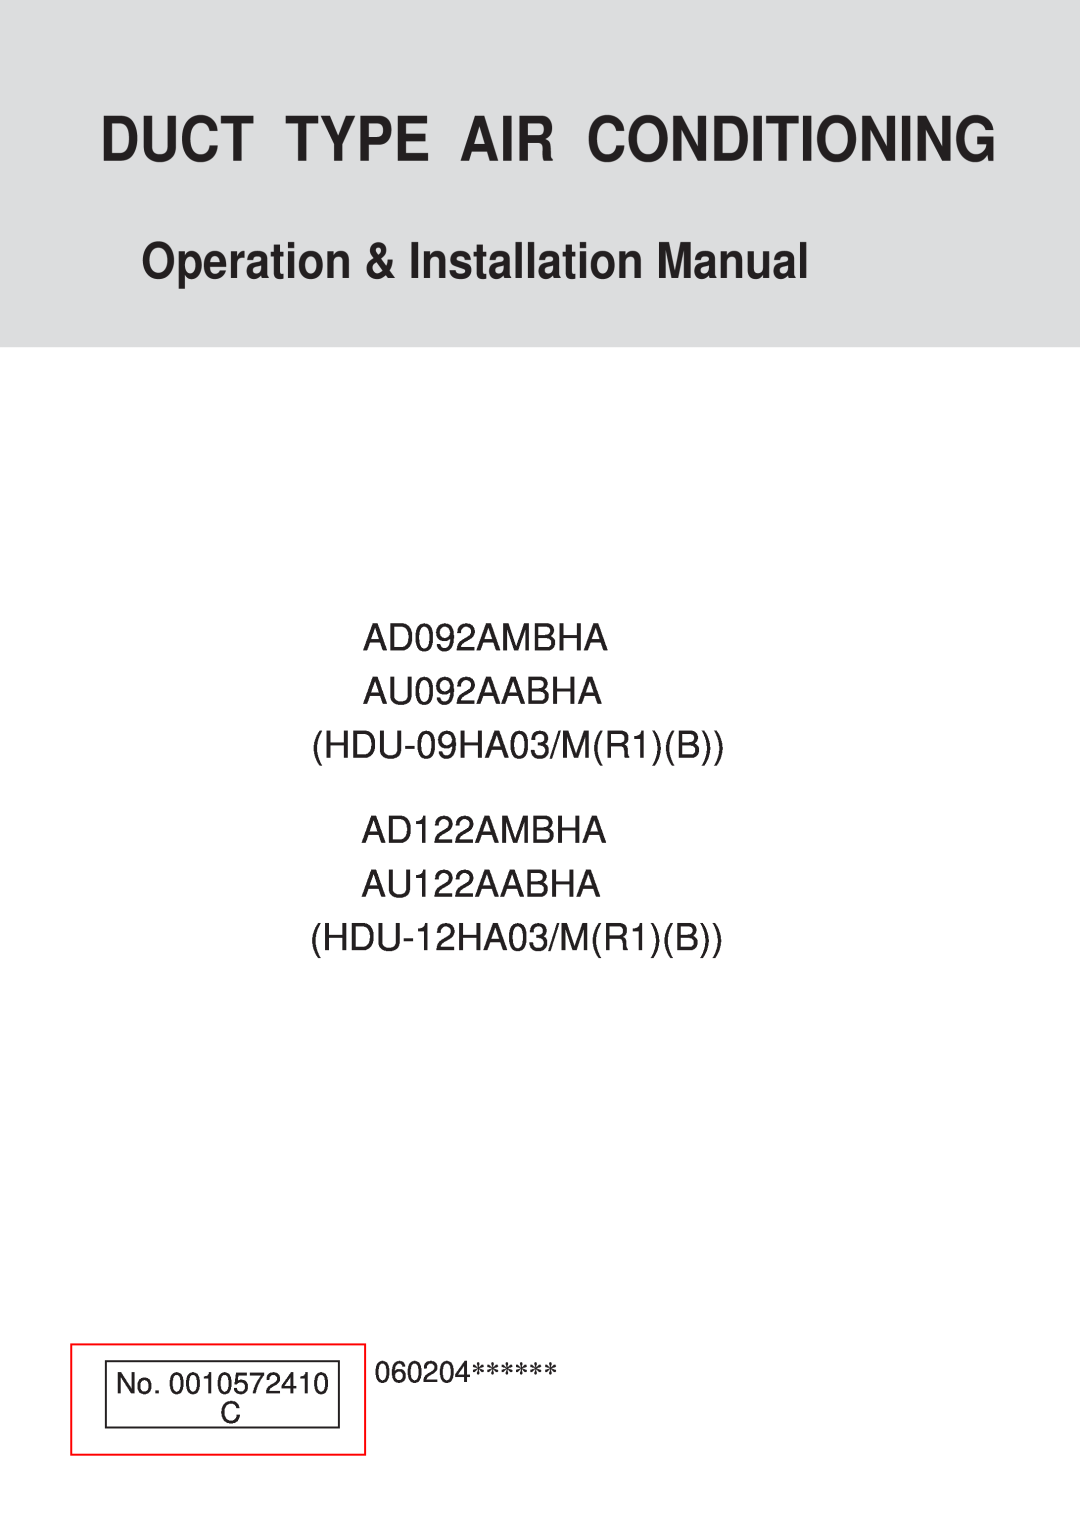 Haier No. 0010572410 installation manual Operation & Installation Manual, AD092AMBHA AU092AABHA HDU-09HA03/MR1B AD122AMBHA 